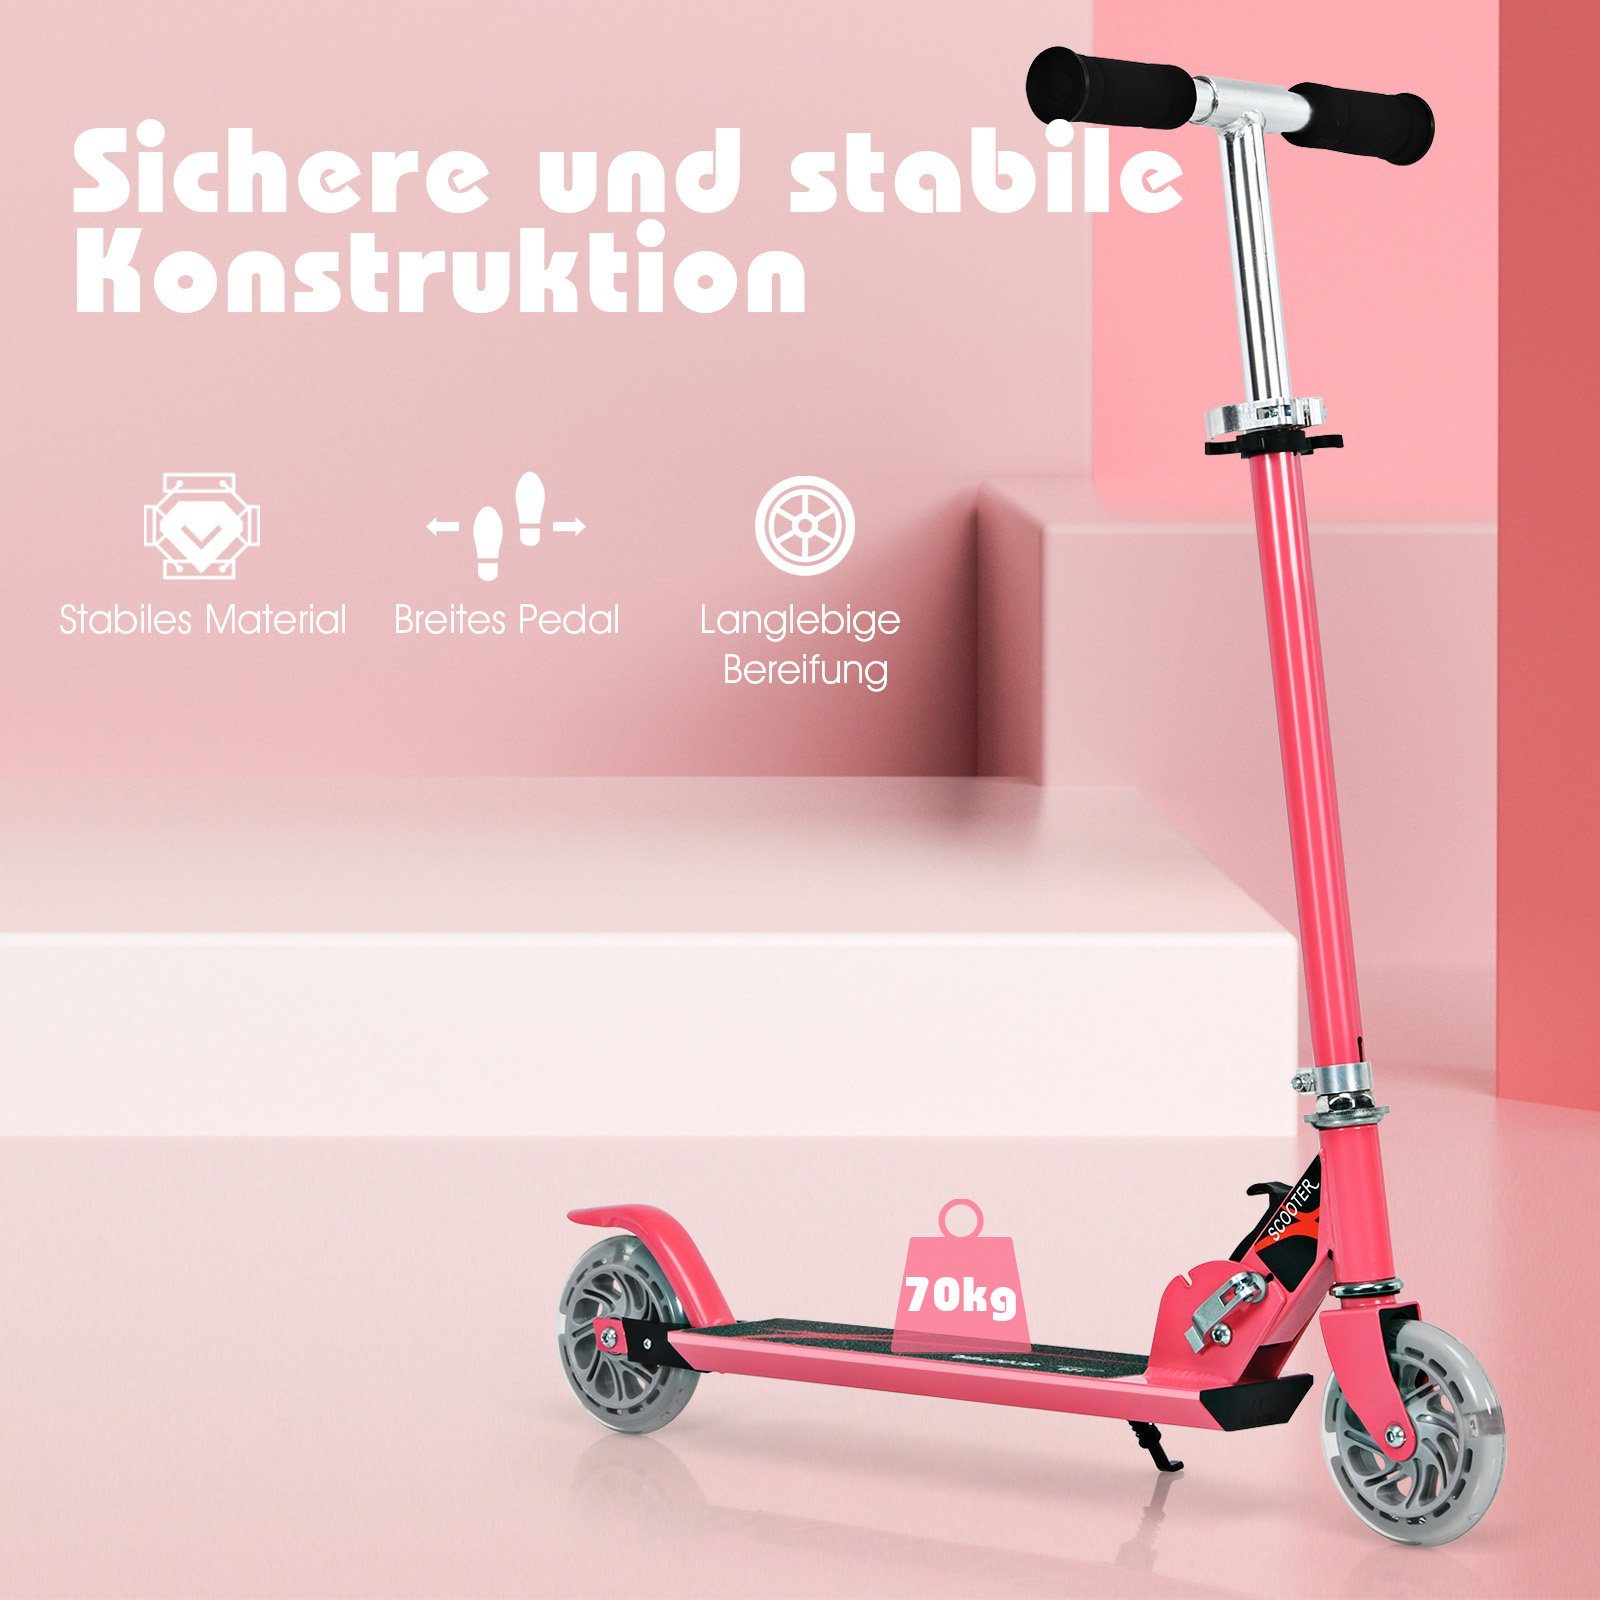 klappbar, höhenverstellbar, mit Räder 2 COSTWAY Scooter rosa Cityroller, LED